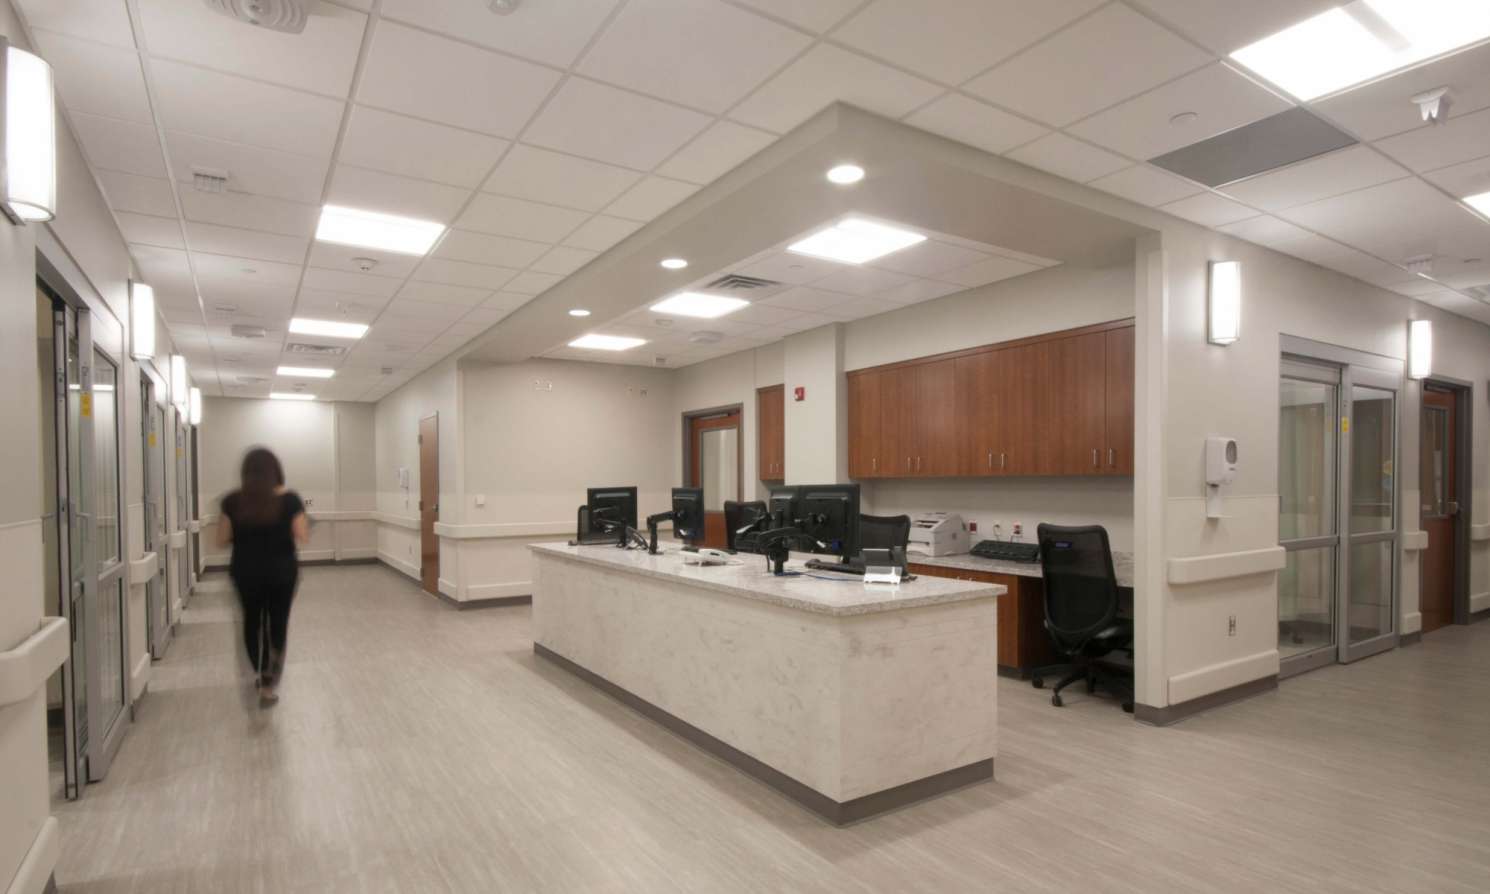 Thibodaux Regional Medical Center, Short Stay Unit WHLC